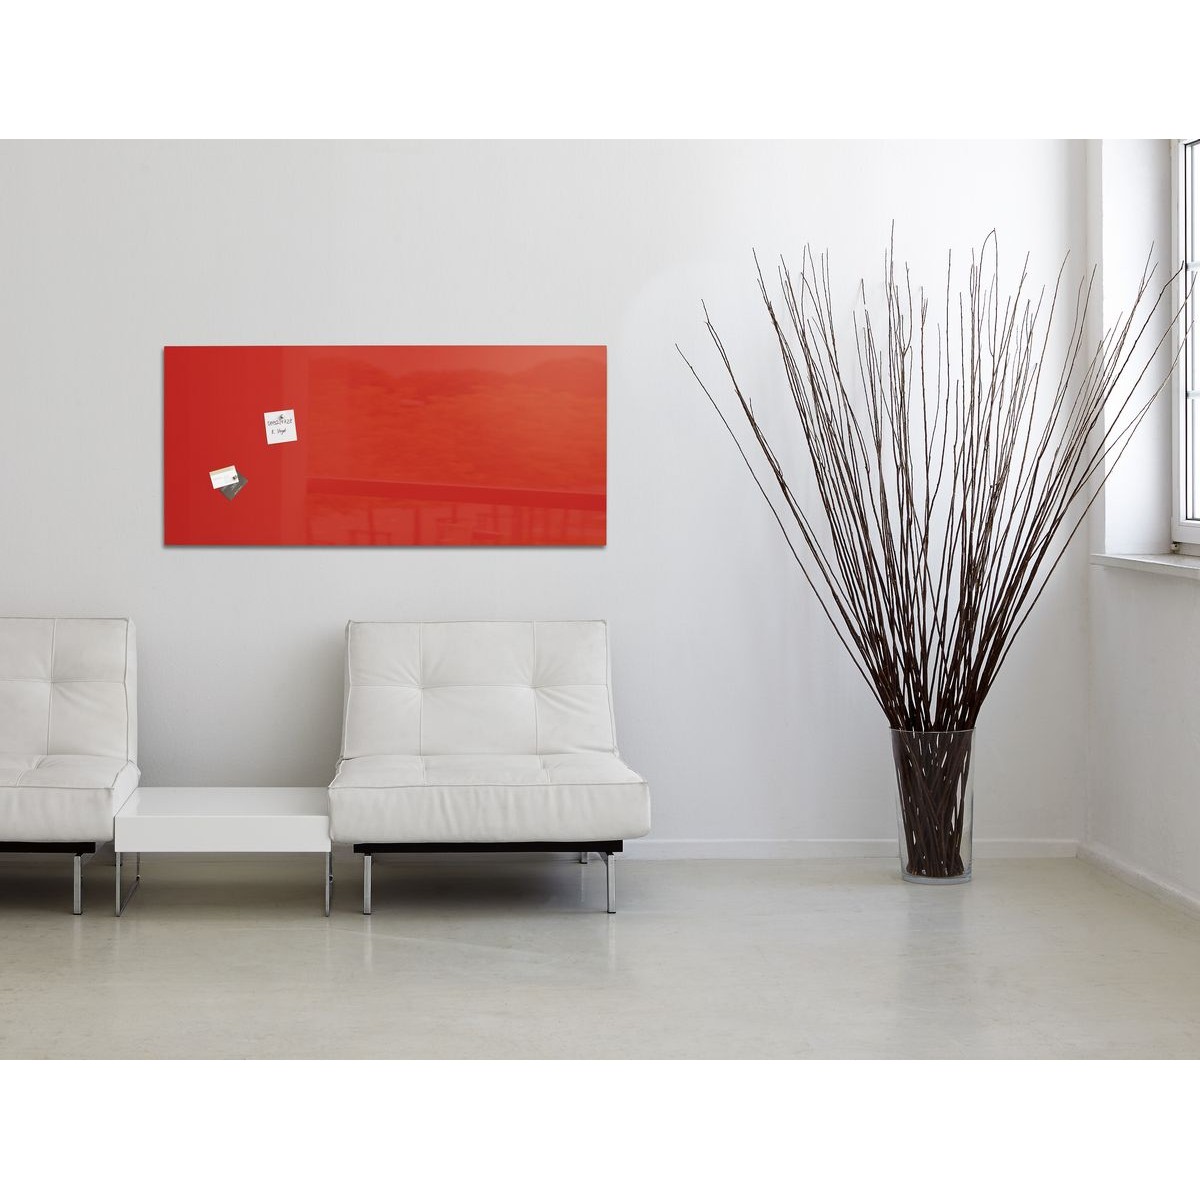 GL242 - Sigel - Lavagna Magnetica - Rossa - 130 x 55 cm 